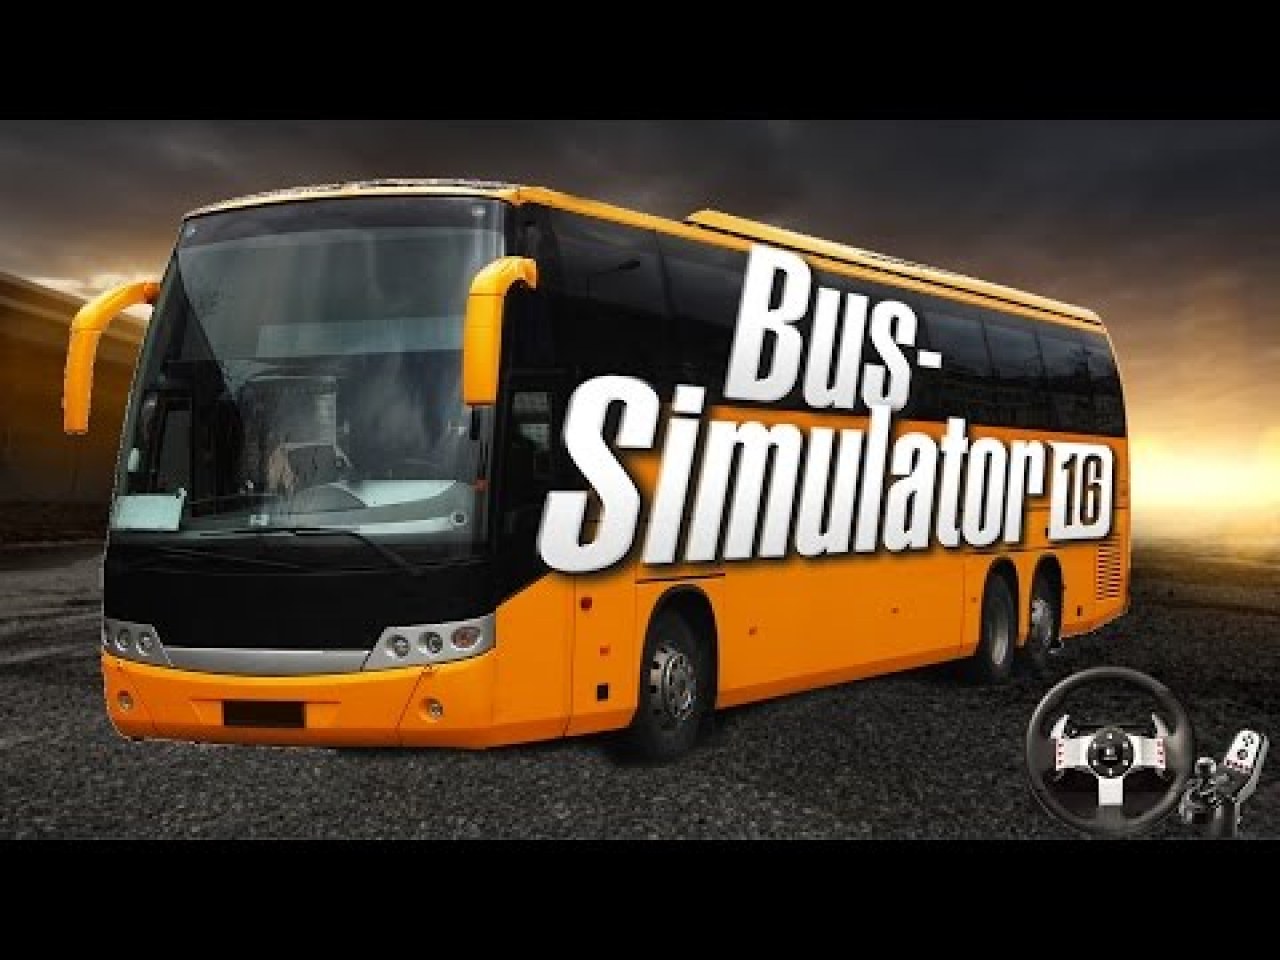 Bang bus 